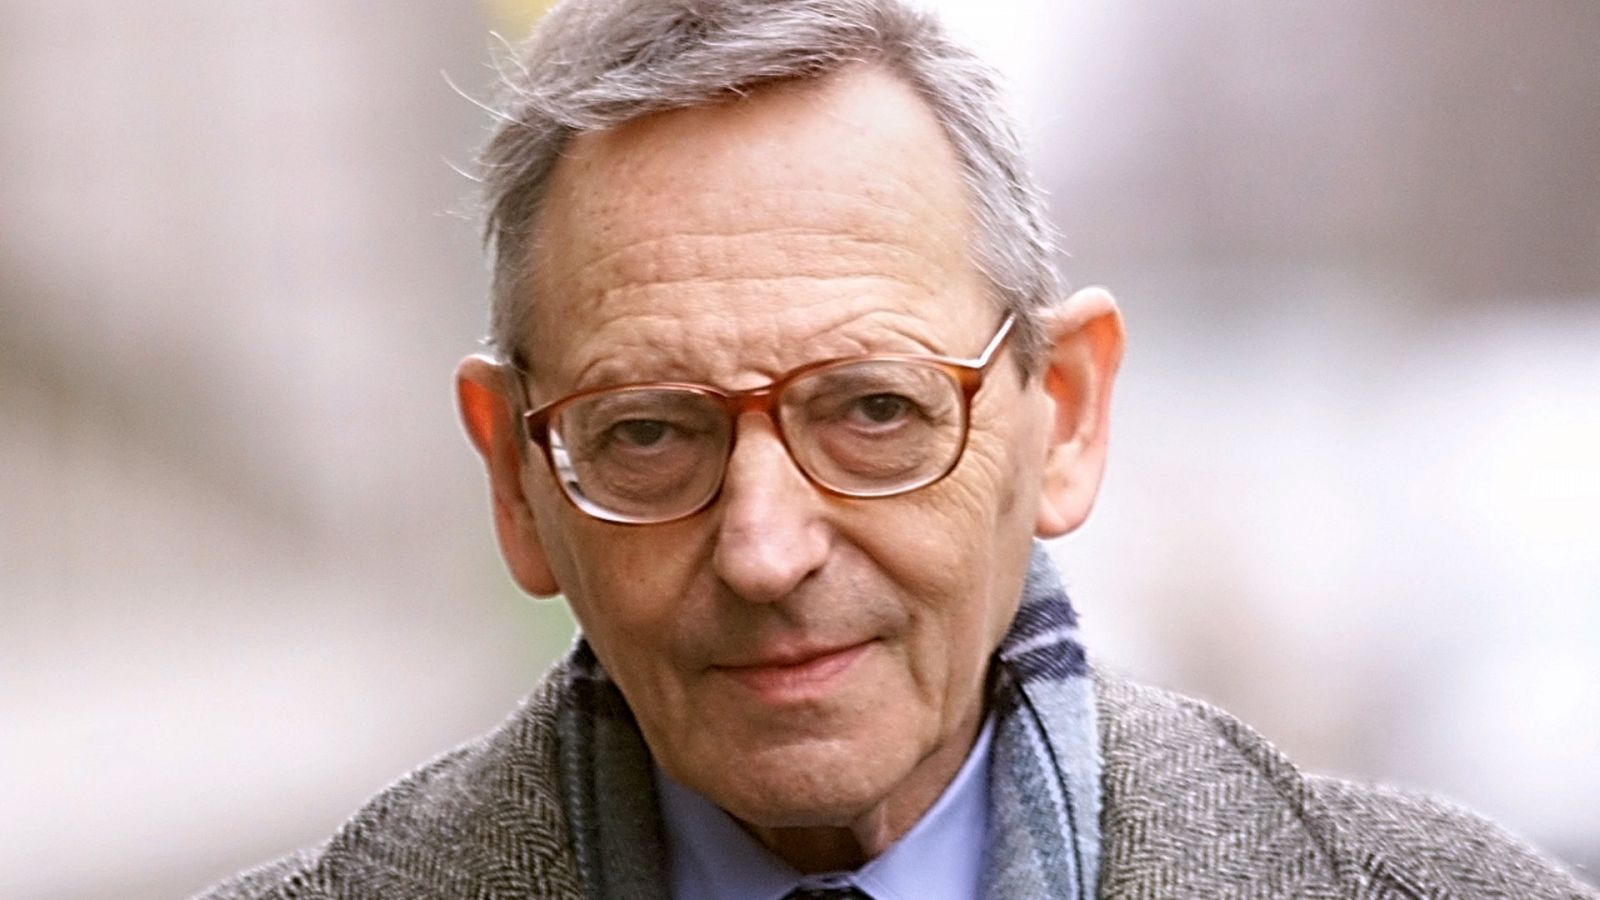 El biólogo francés François Gros, en una imagen de 1999.